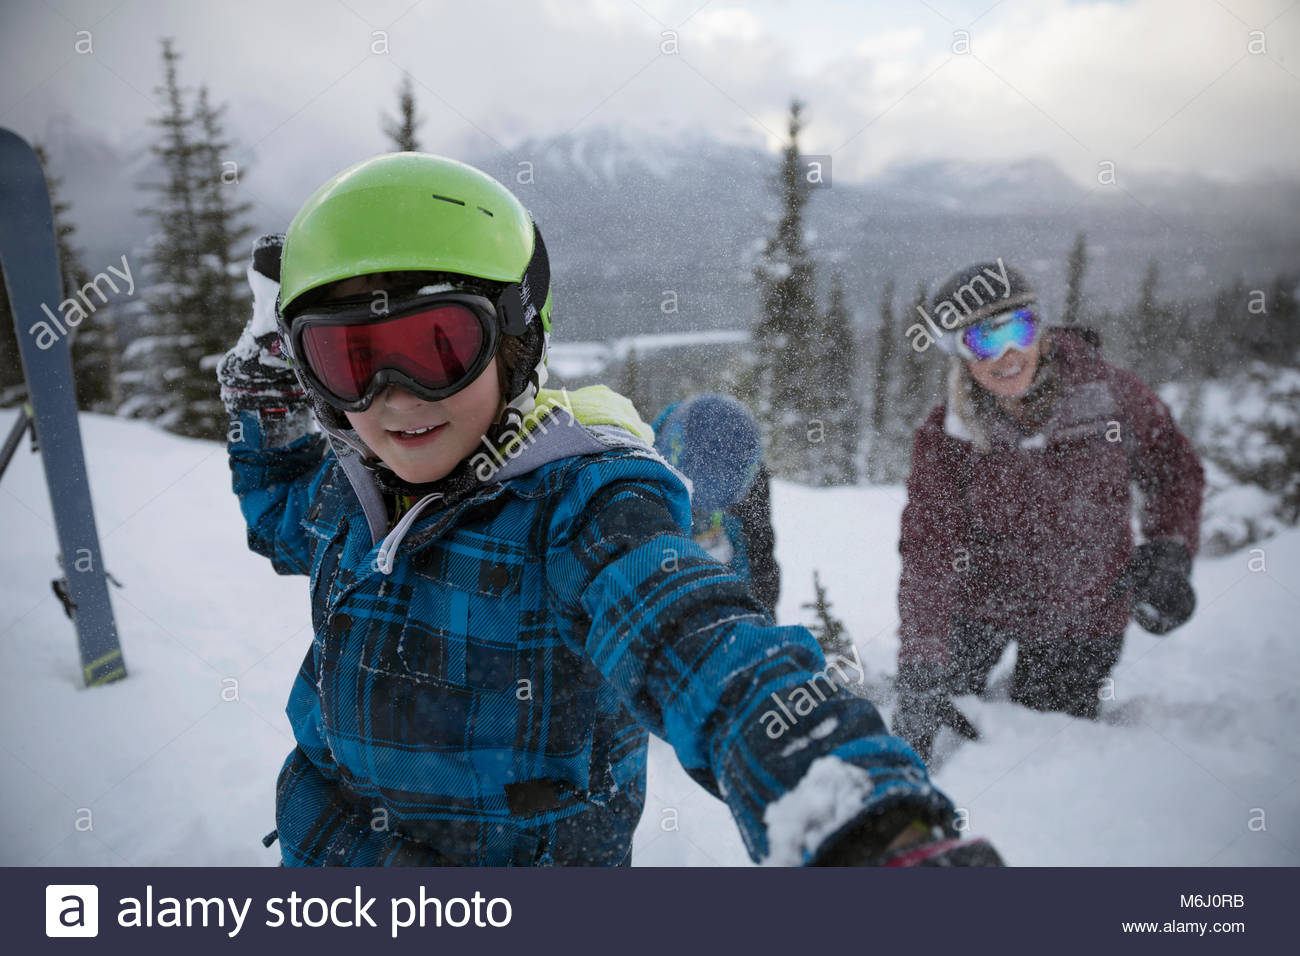 Portrait mischievous boy skier throwing snowball Stock Photo